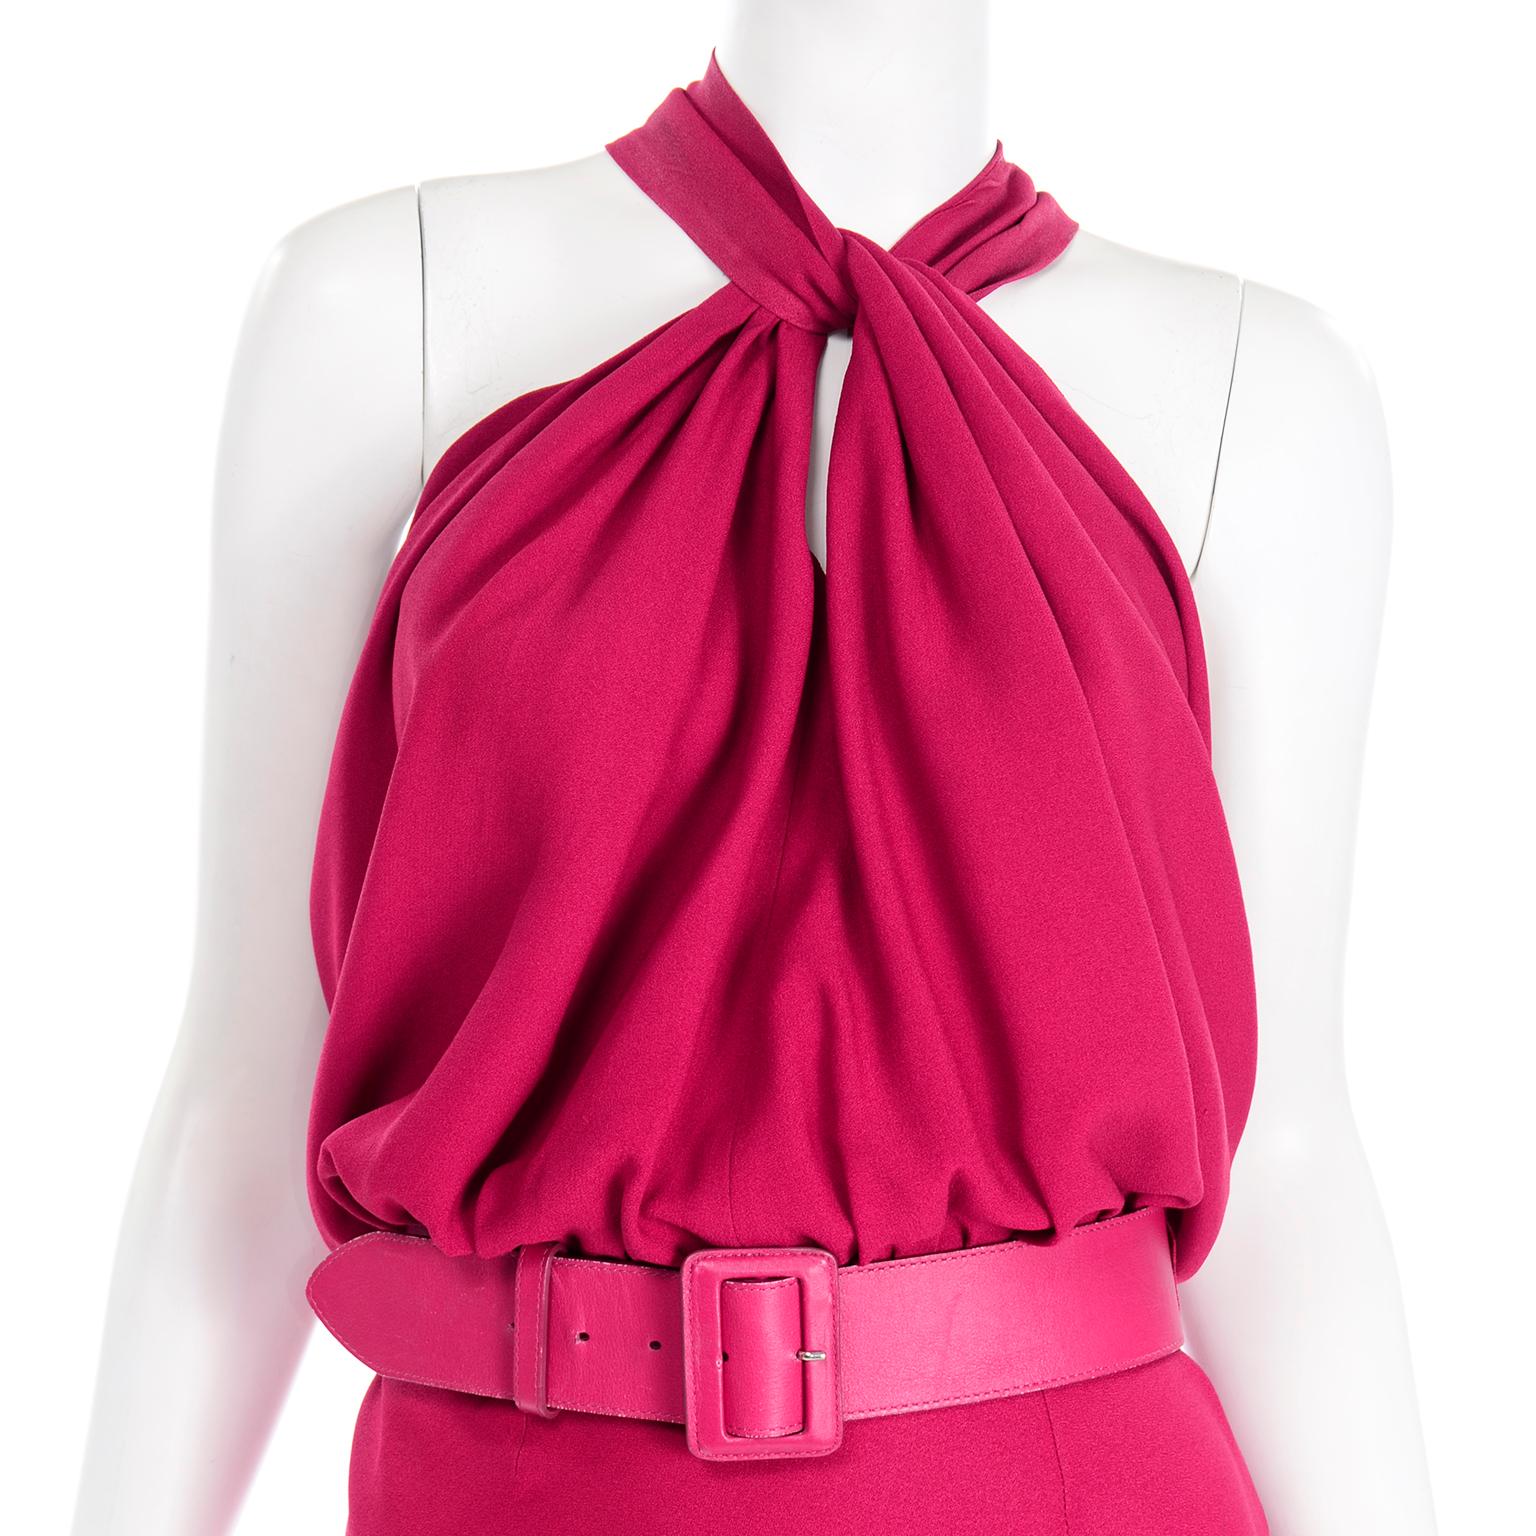 Christian Dior John Galliano Raspberry Magenta Pink 1930s Inspired Evening Dress 1